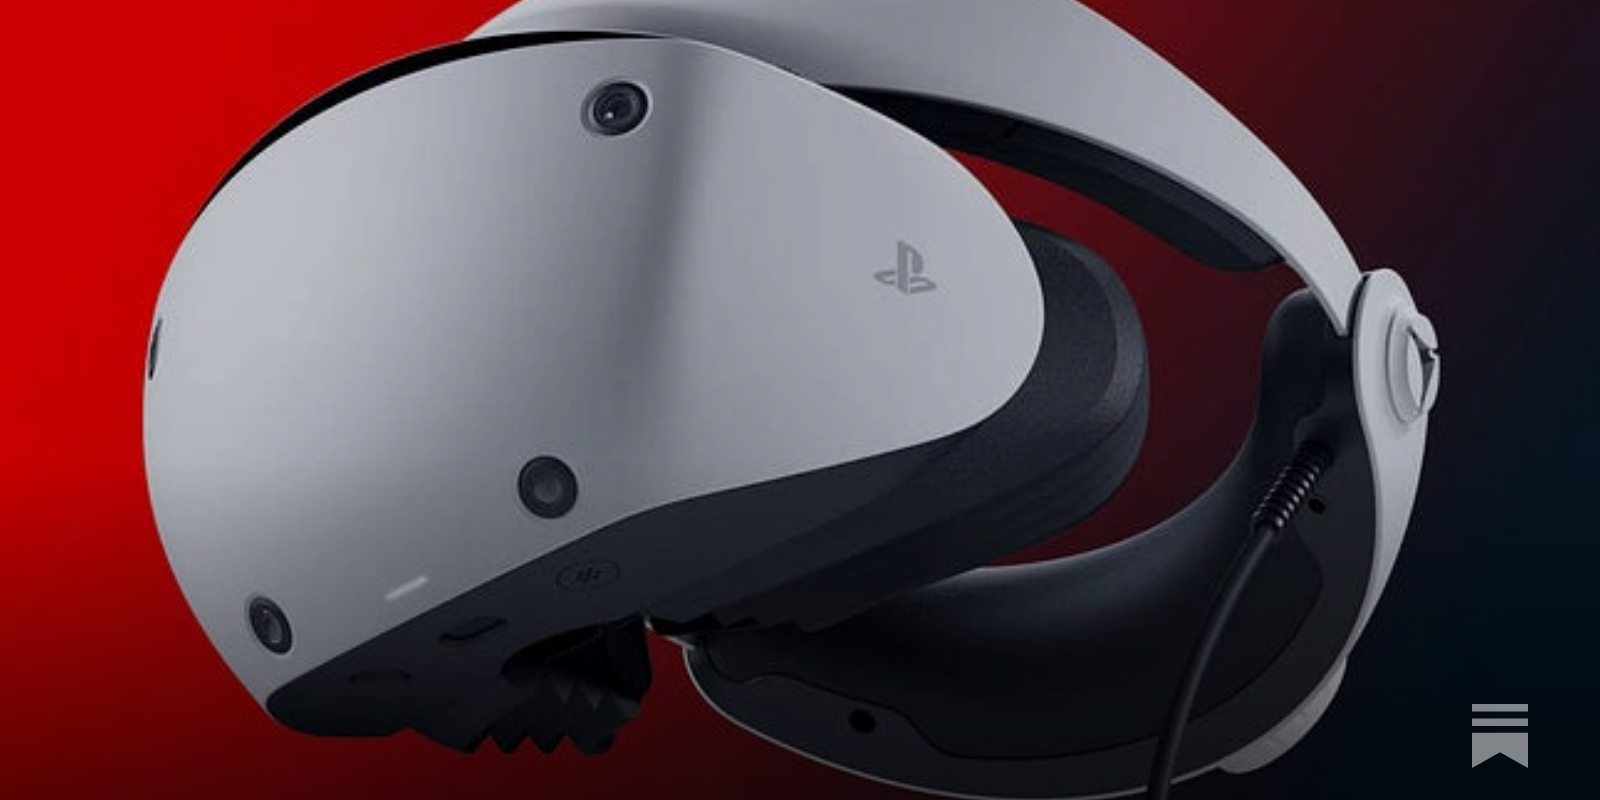 PSVR 2 specs: what's inside PlayStation VR 2?